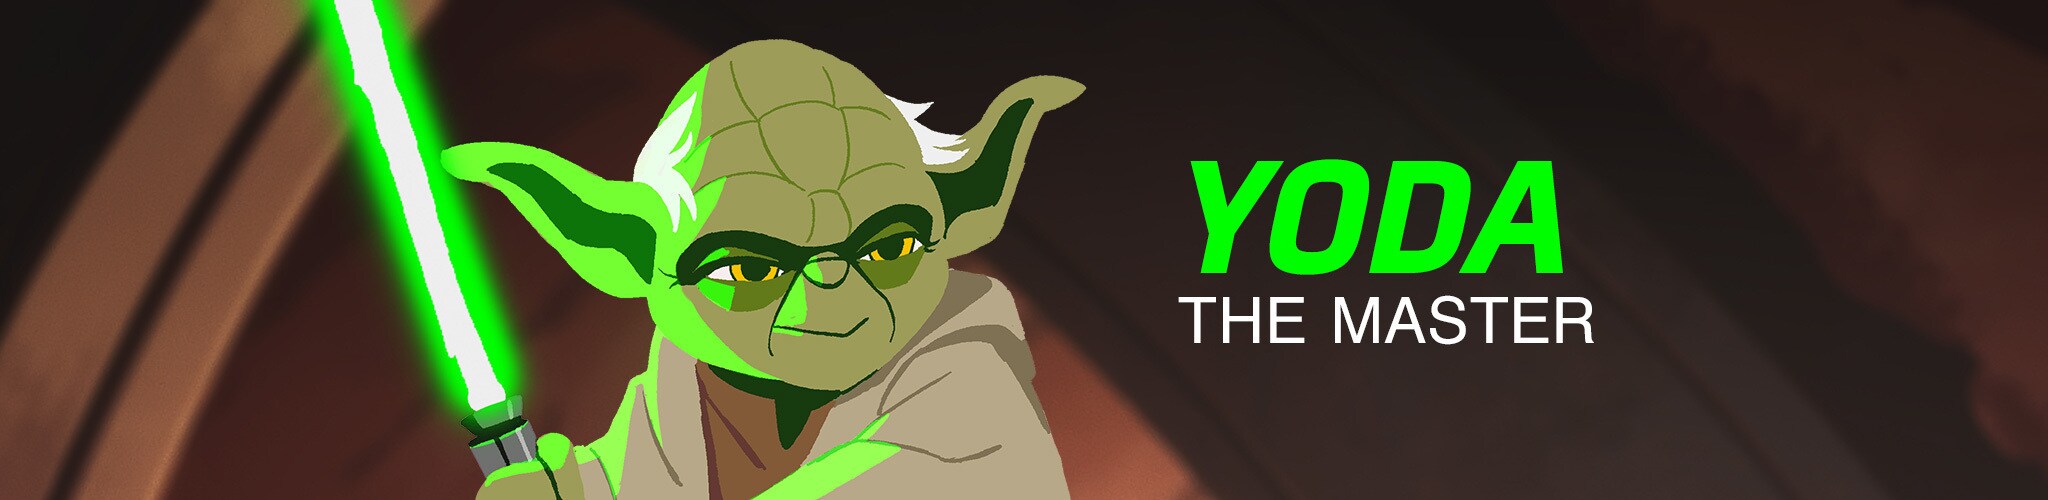 Yoda - The Master